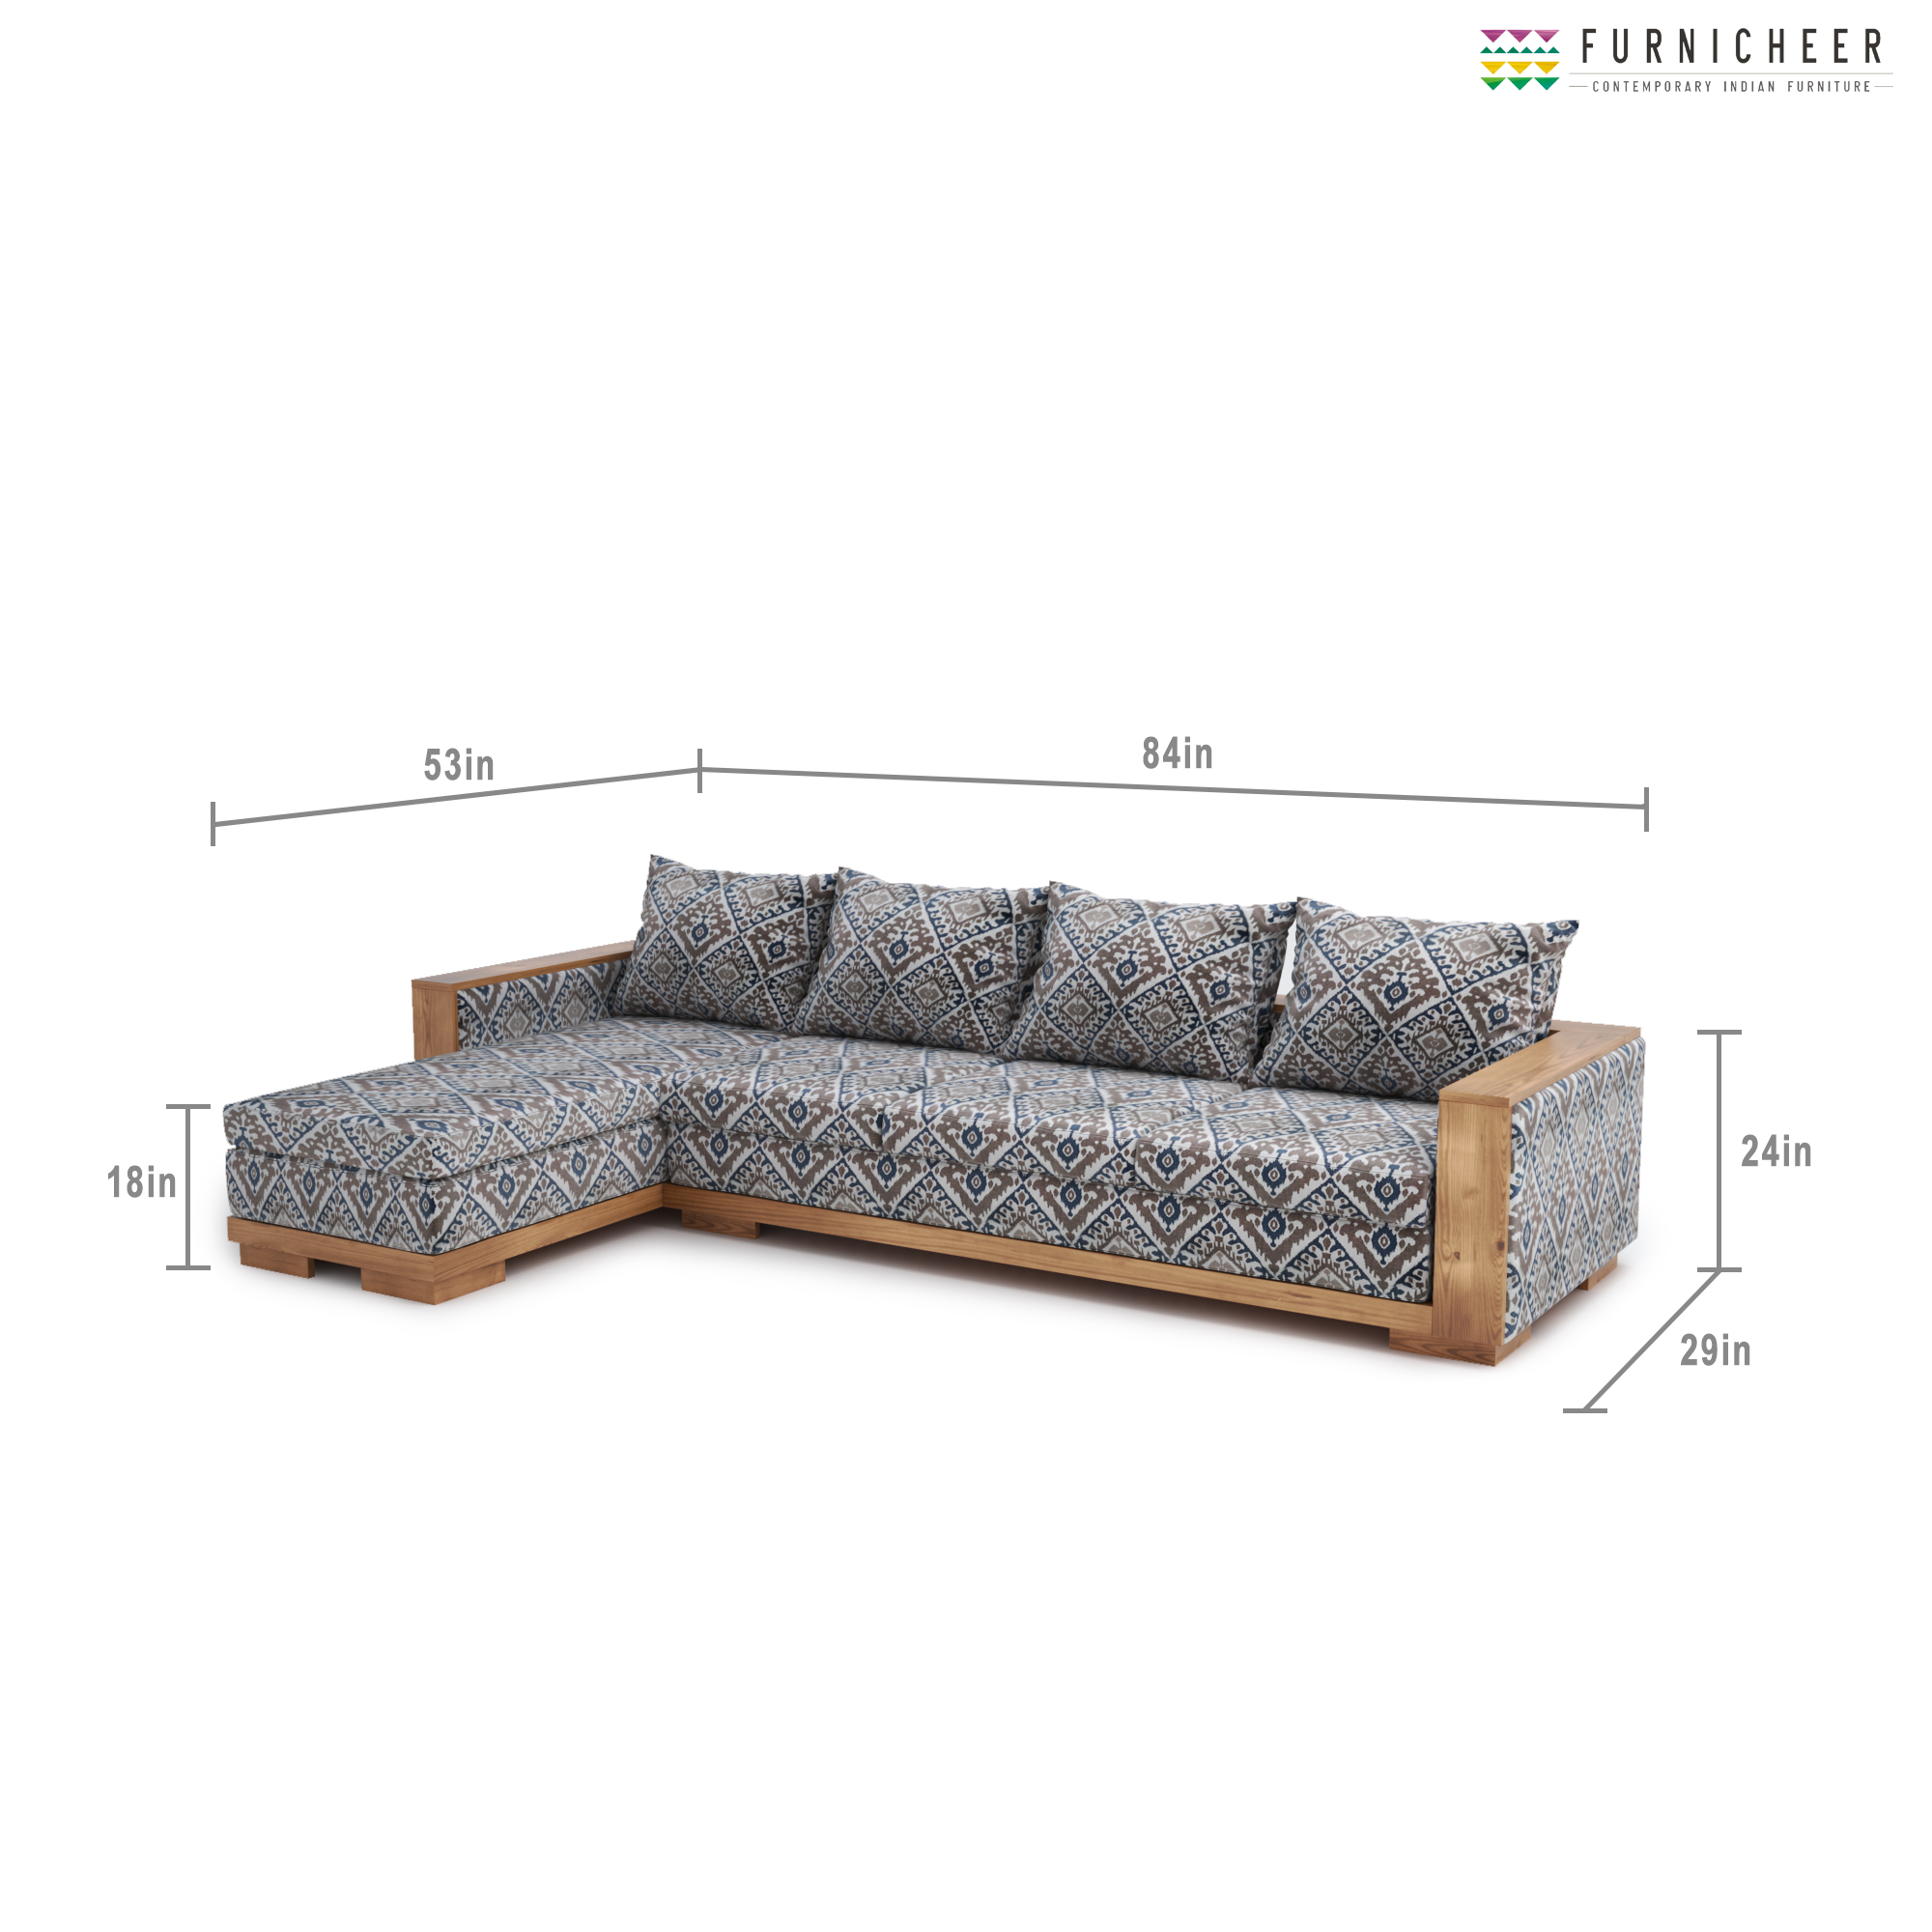 L shape sofa measurement_3